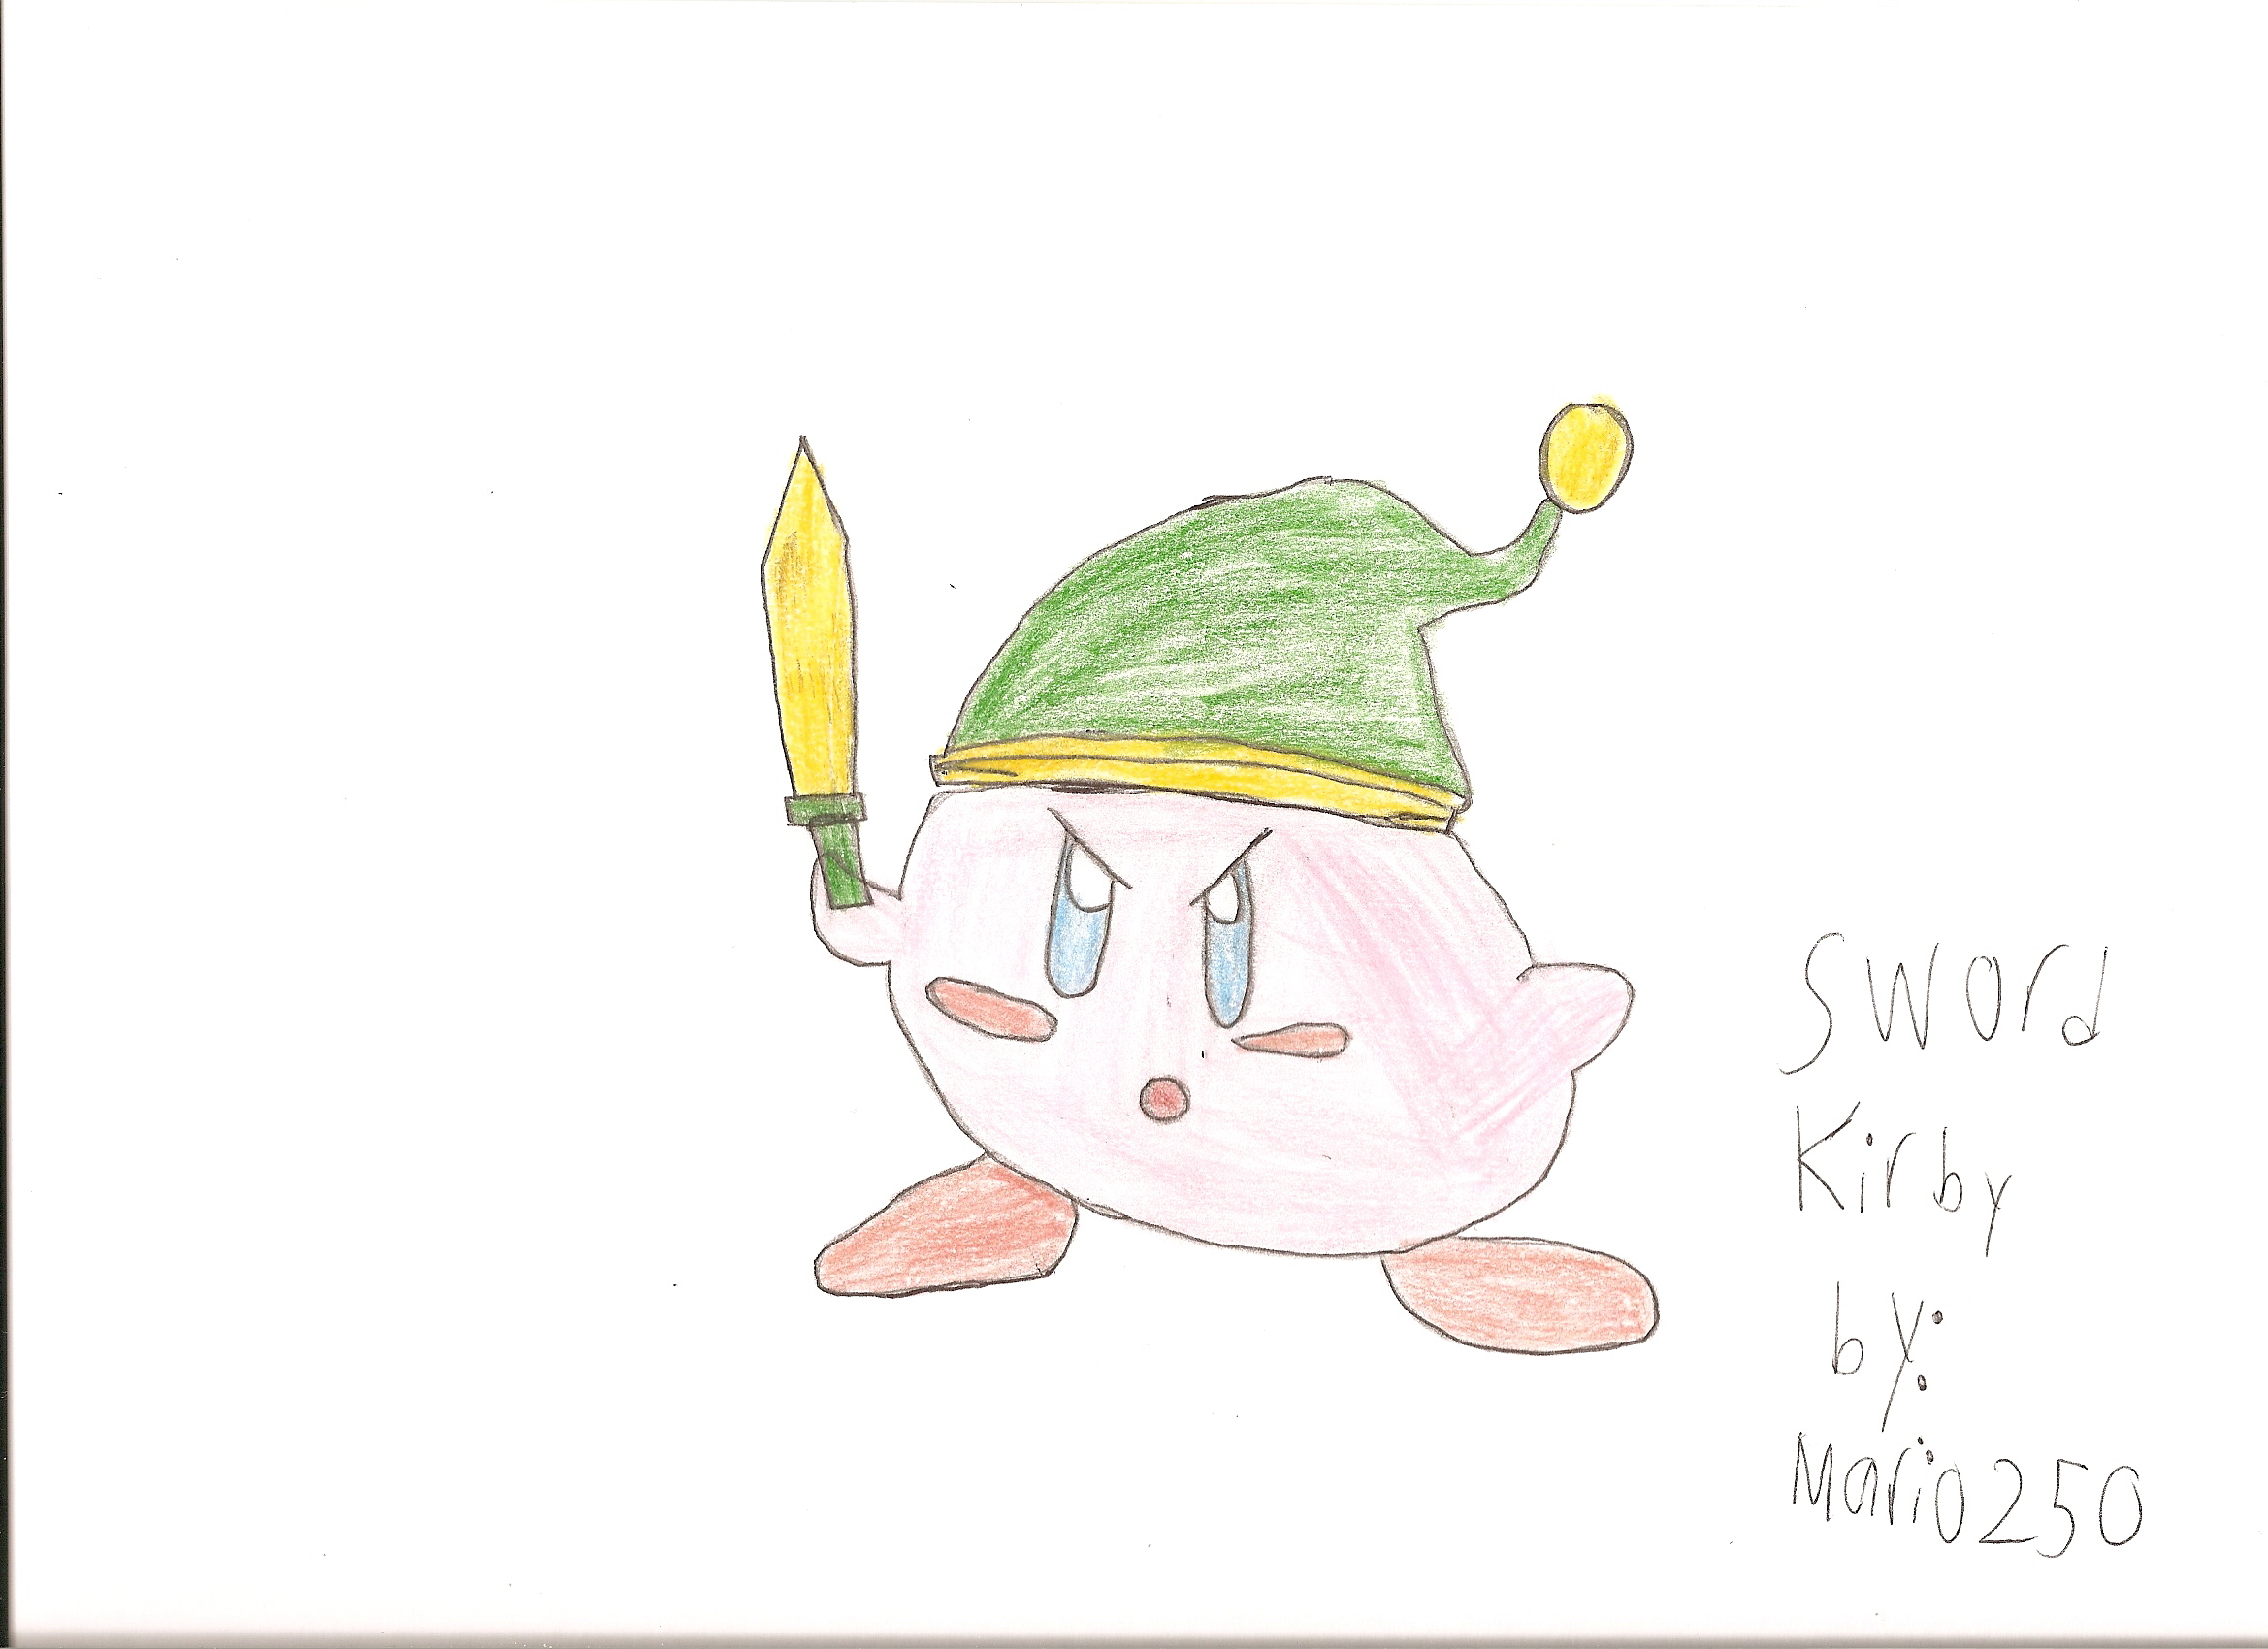 Sword Kirby by Mario250